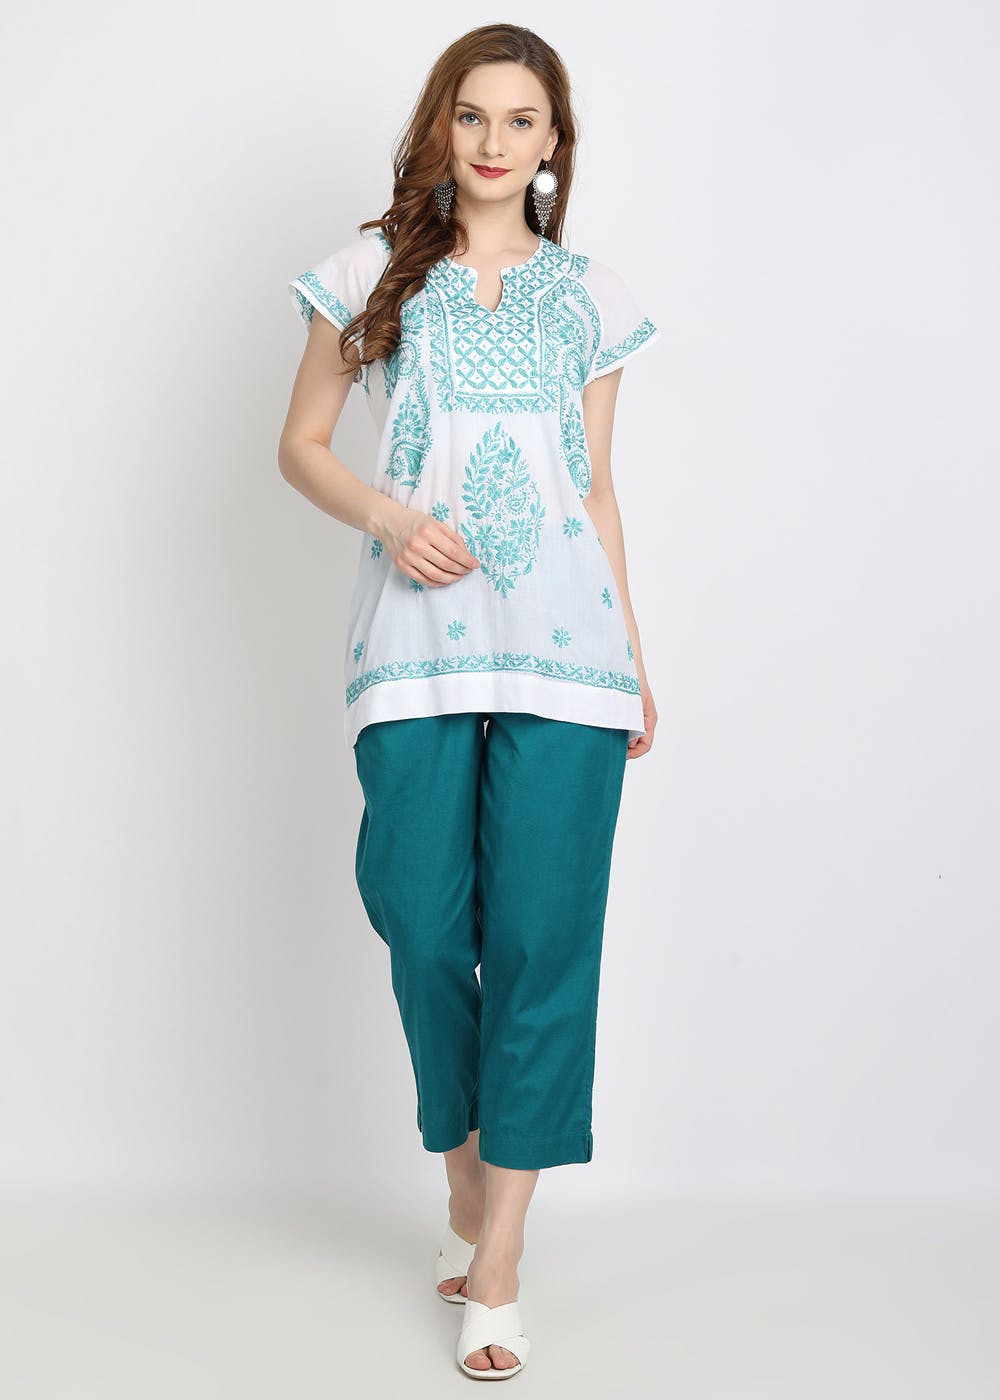 Indian Shirt for Women, Short Kurti, White Linen Shirt, Indian Kurta, Linen  Washed Soft Shirt Custom Made by Modernmoveboutique - Etsy Denmark